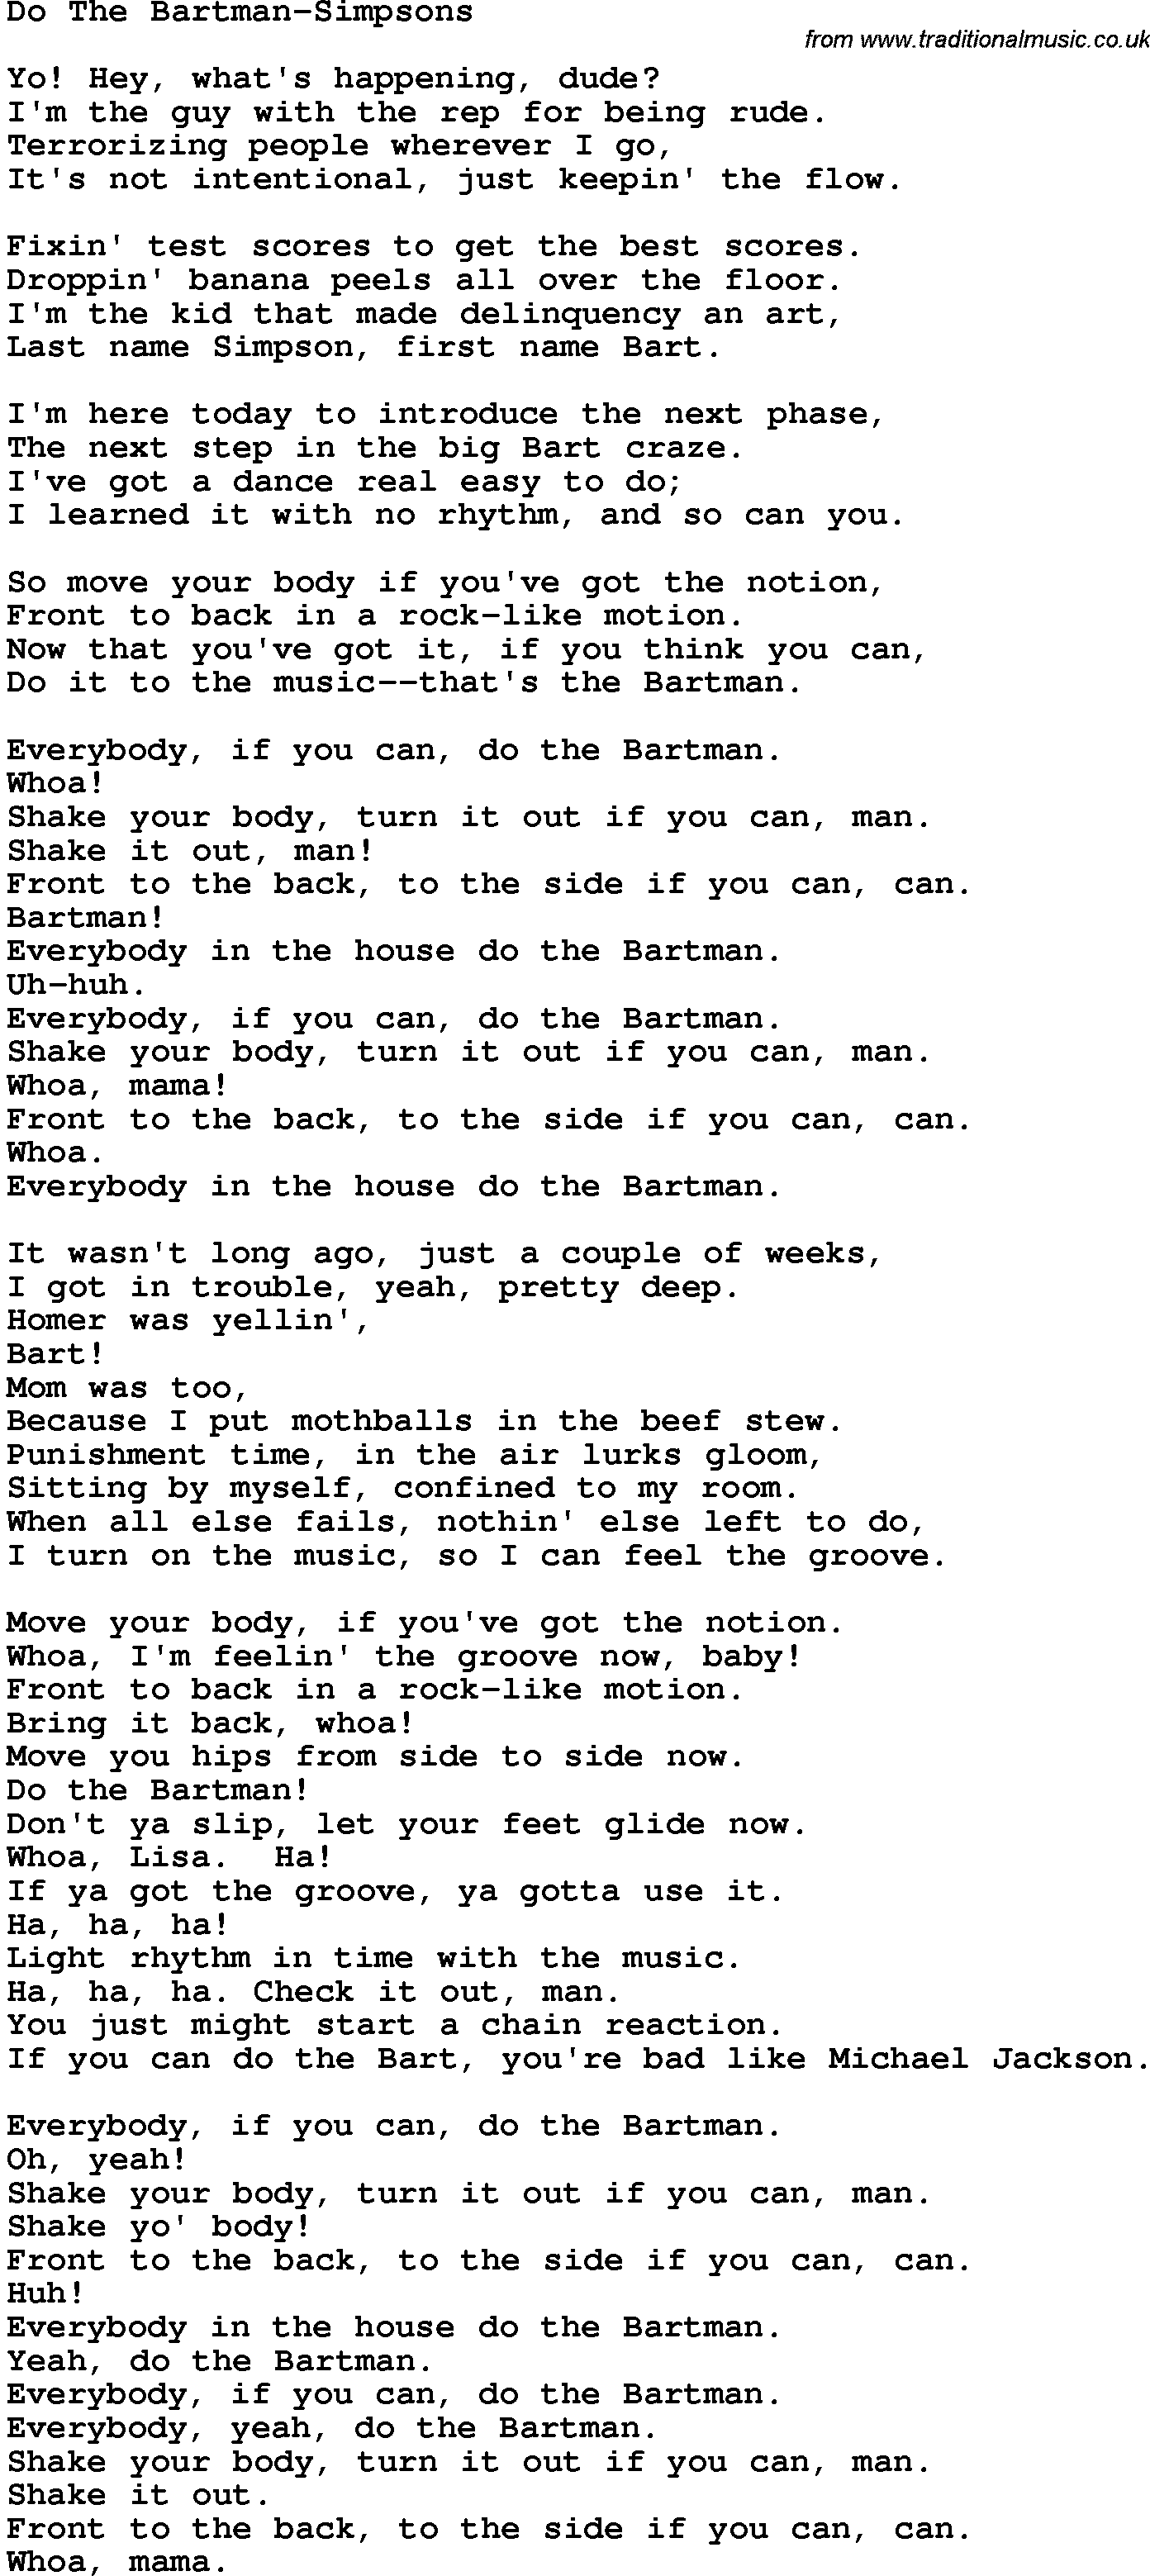 Novelty song: Do The Bartman-Simpsons lyrics